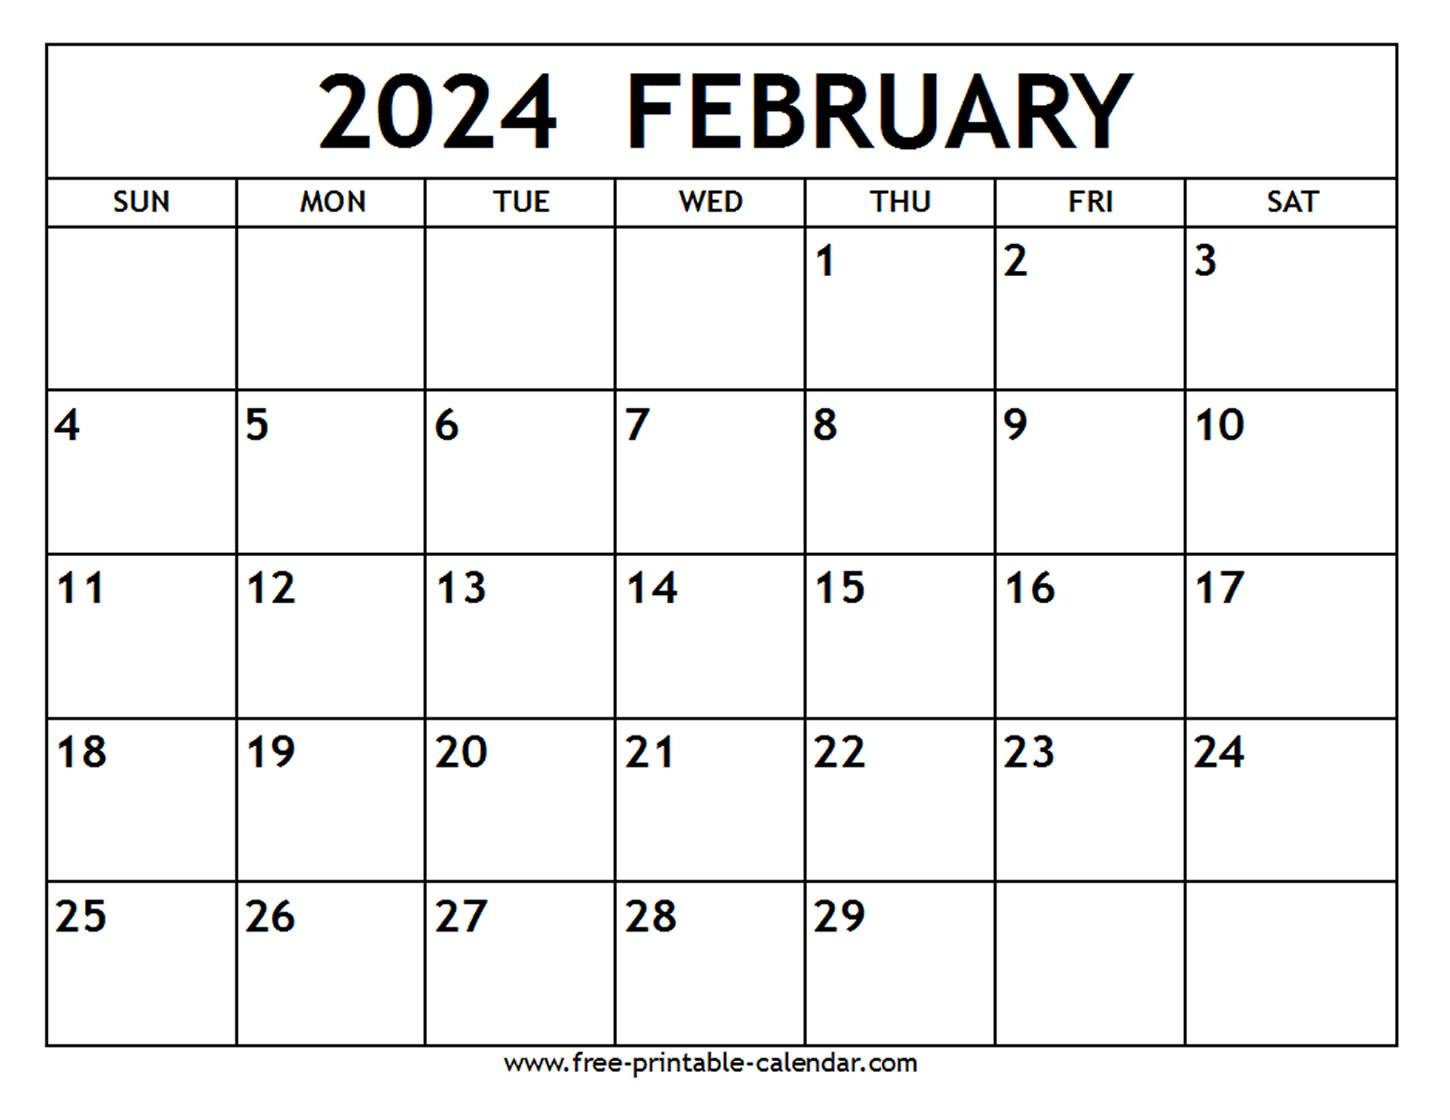 February 2024 Calendar - Free-Printable-Calendar | Printable Calendar 2024 Feb